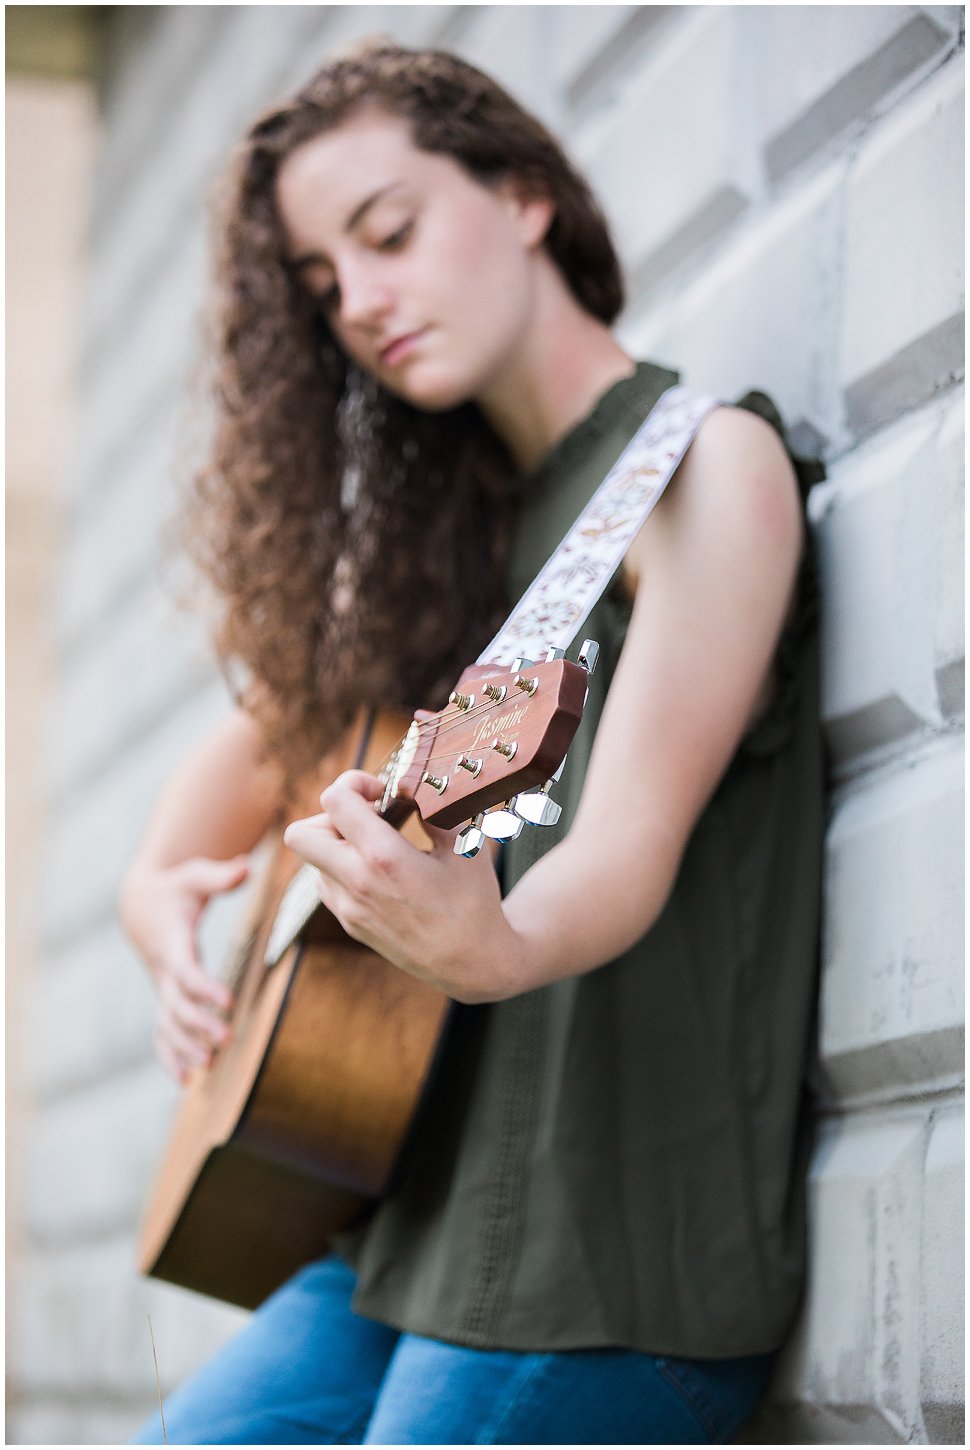 Keene Senior Photography- Girl playing guitar. Creative image